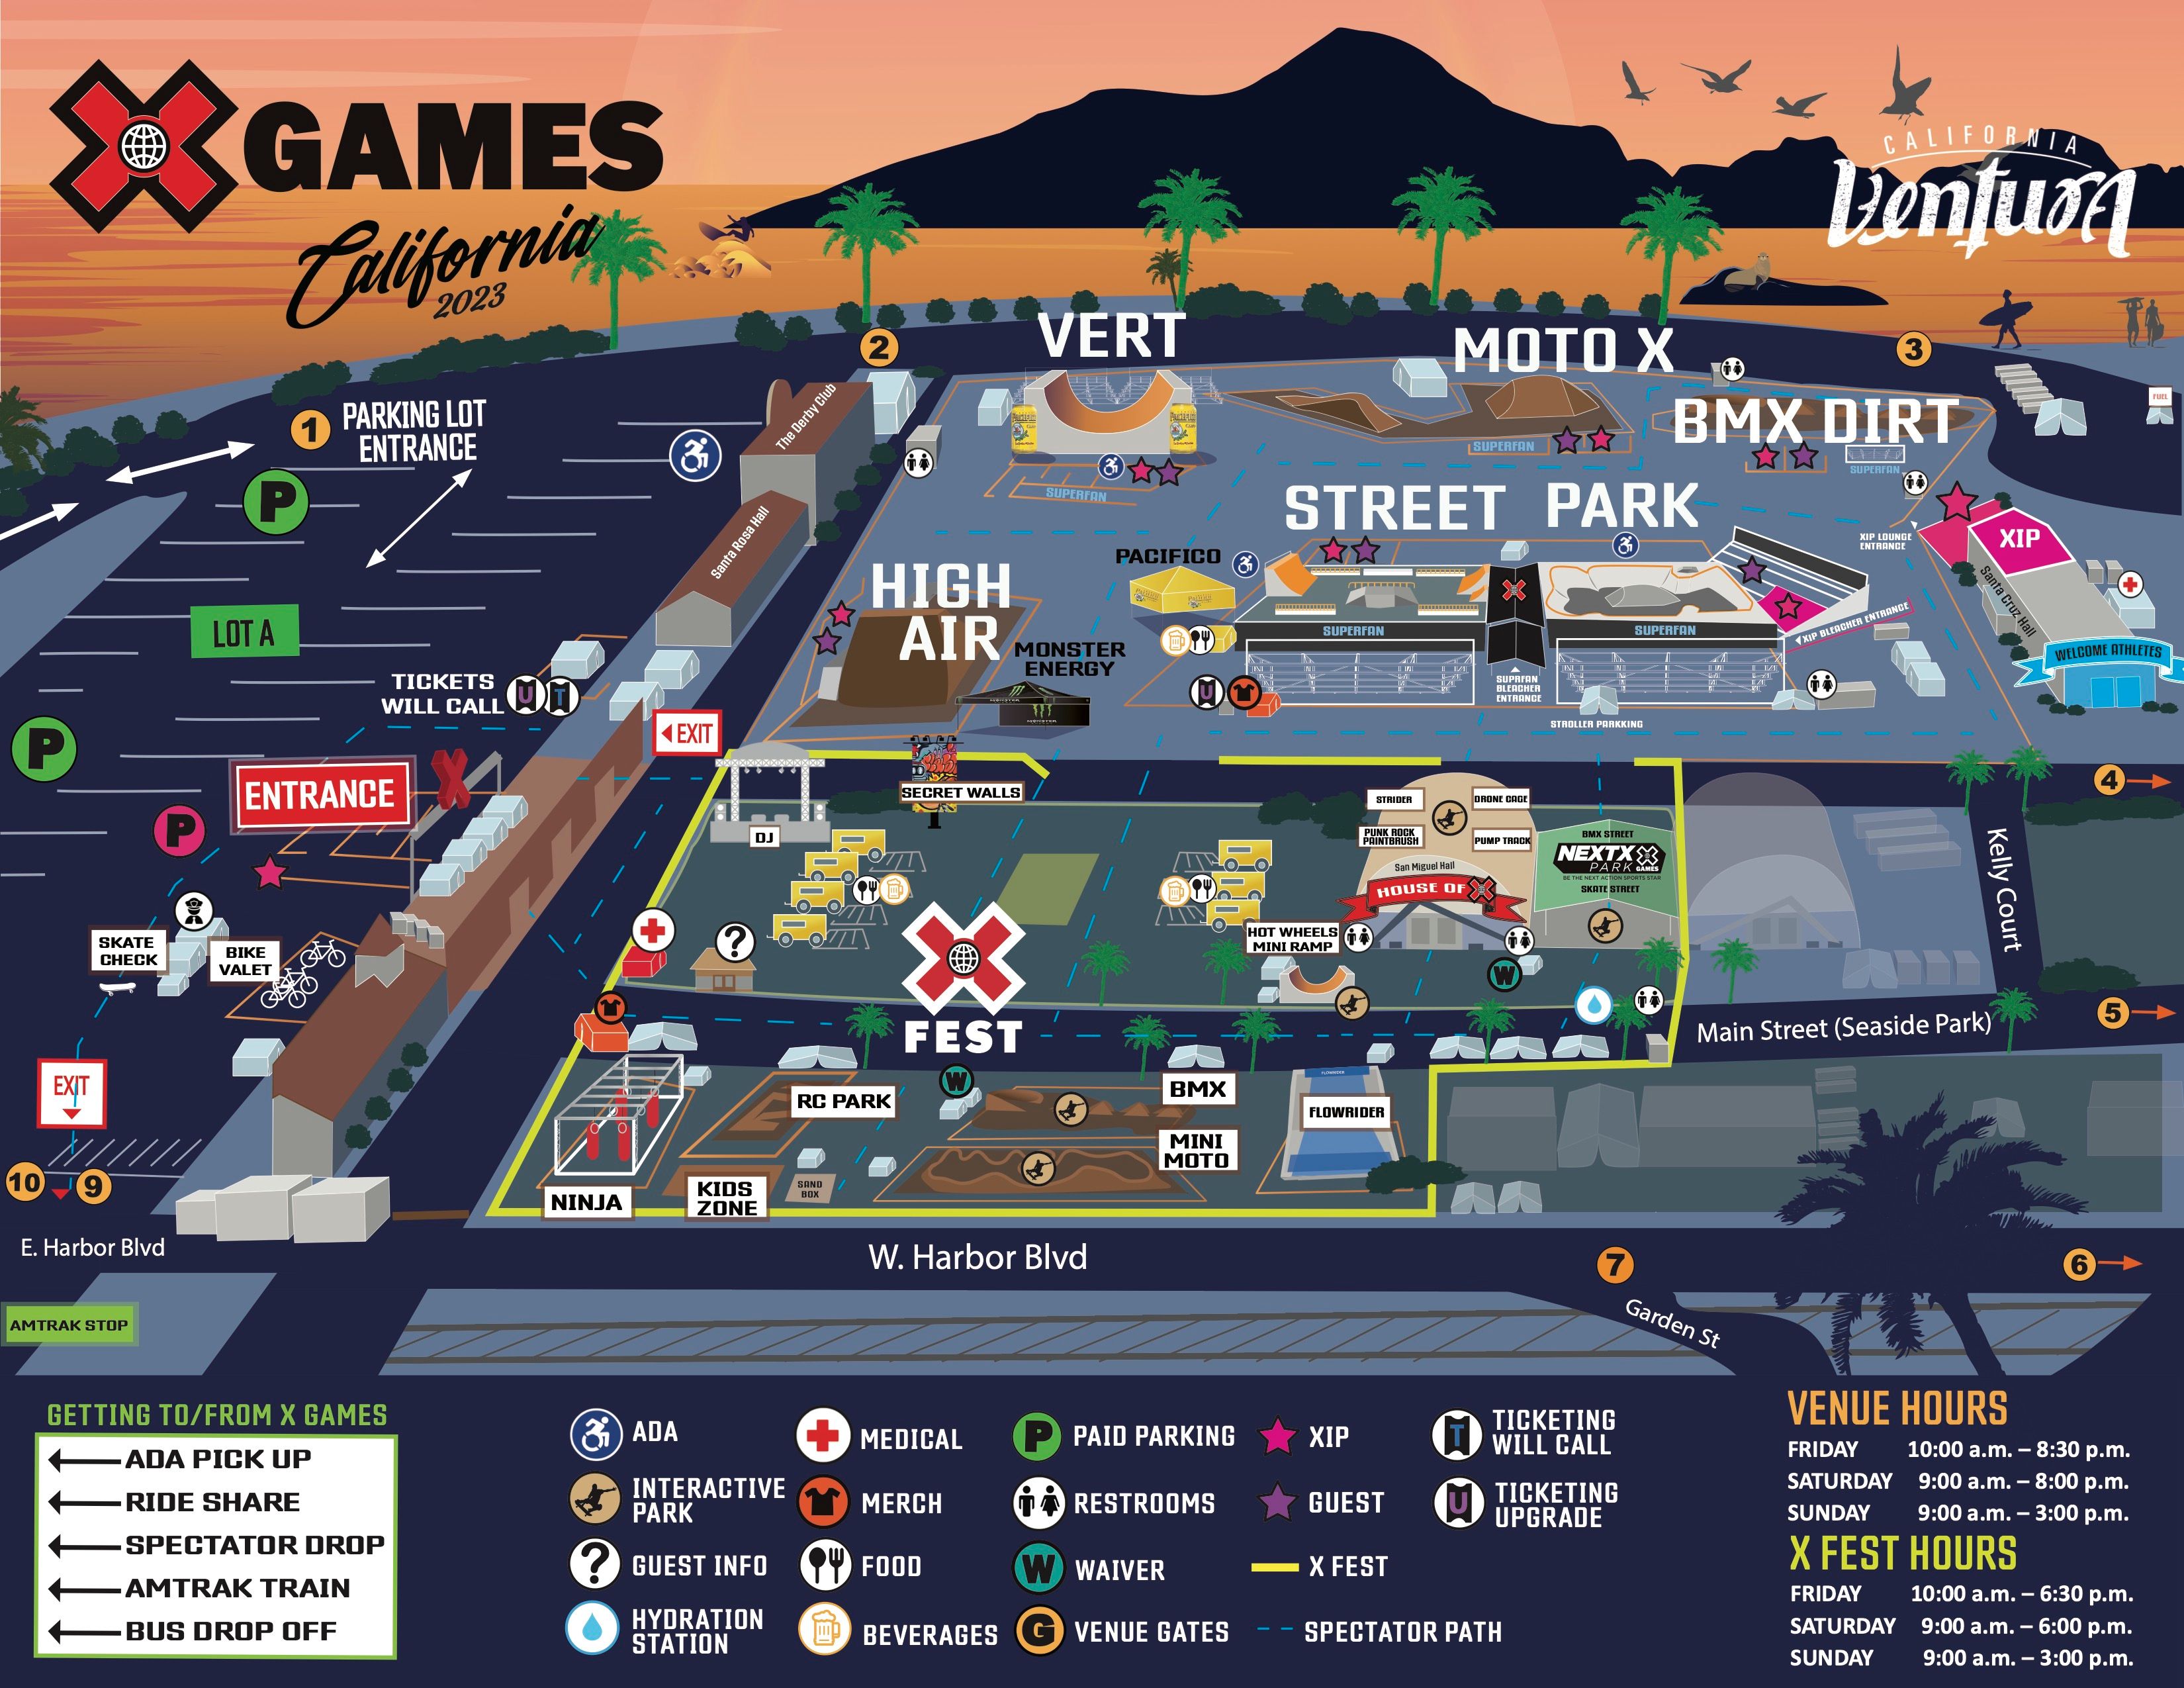 Venue Map for X Games California 2023 - X Games